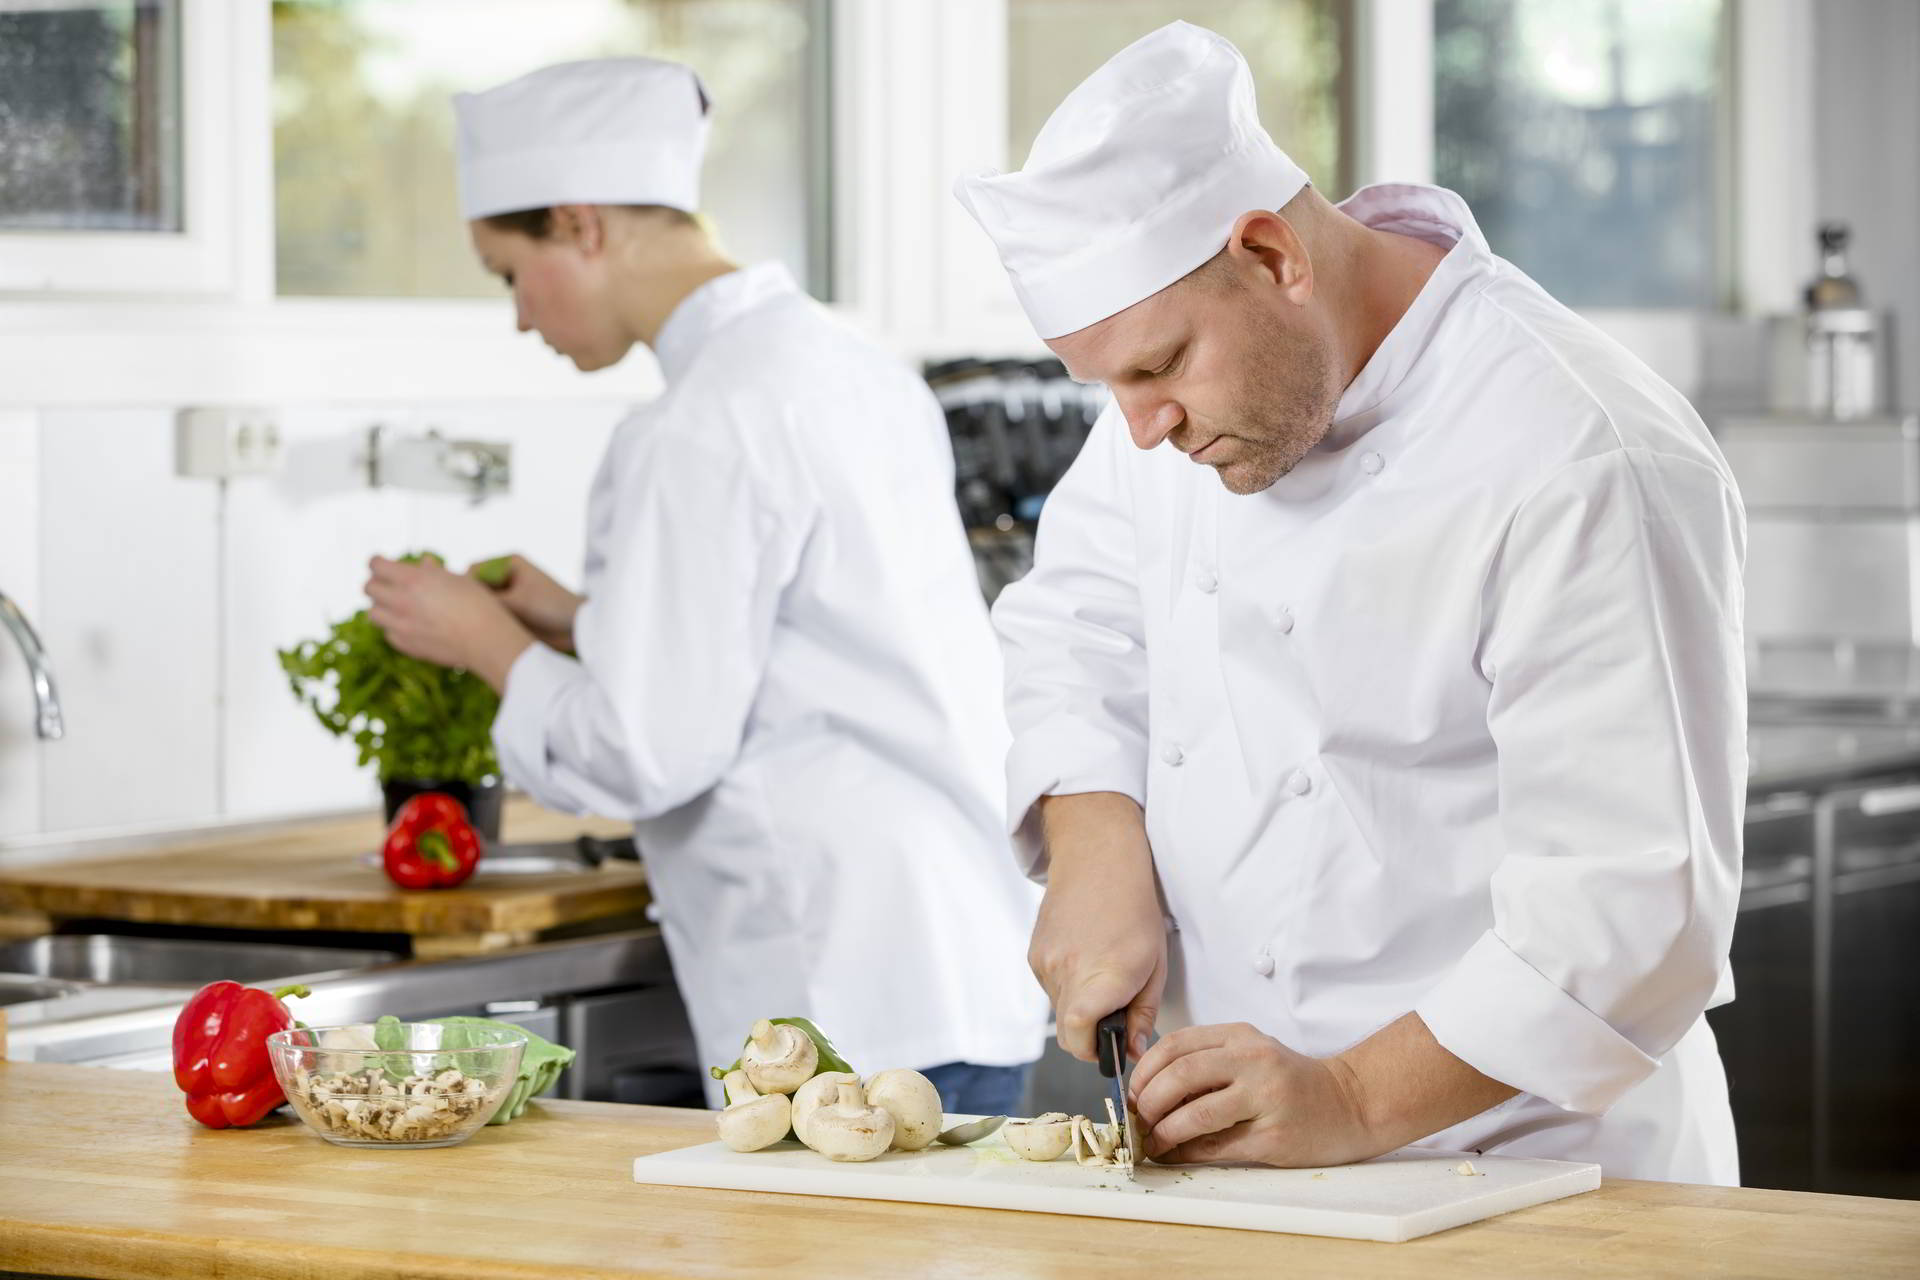 professional chefs preparing vegetables large kitchen